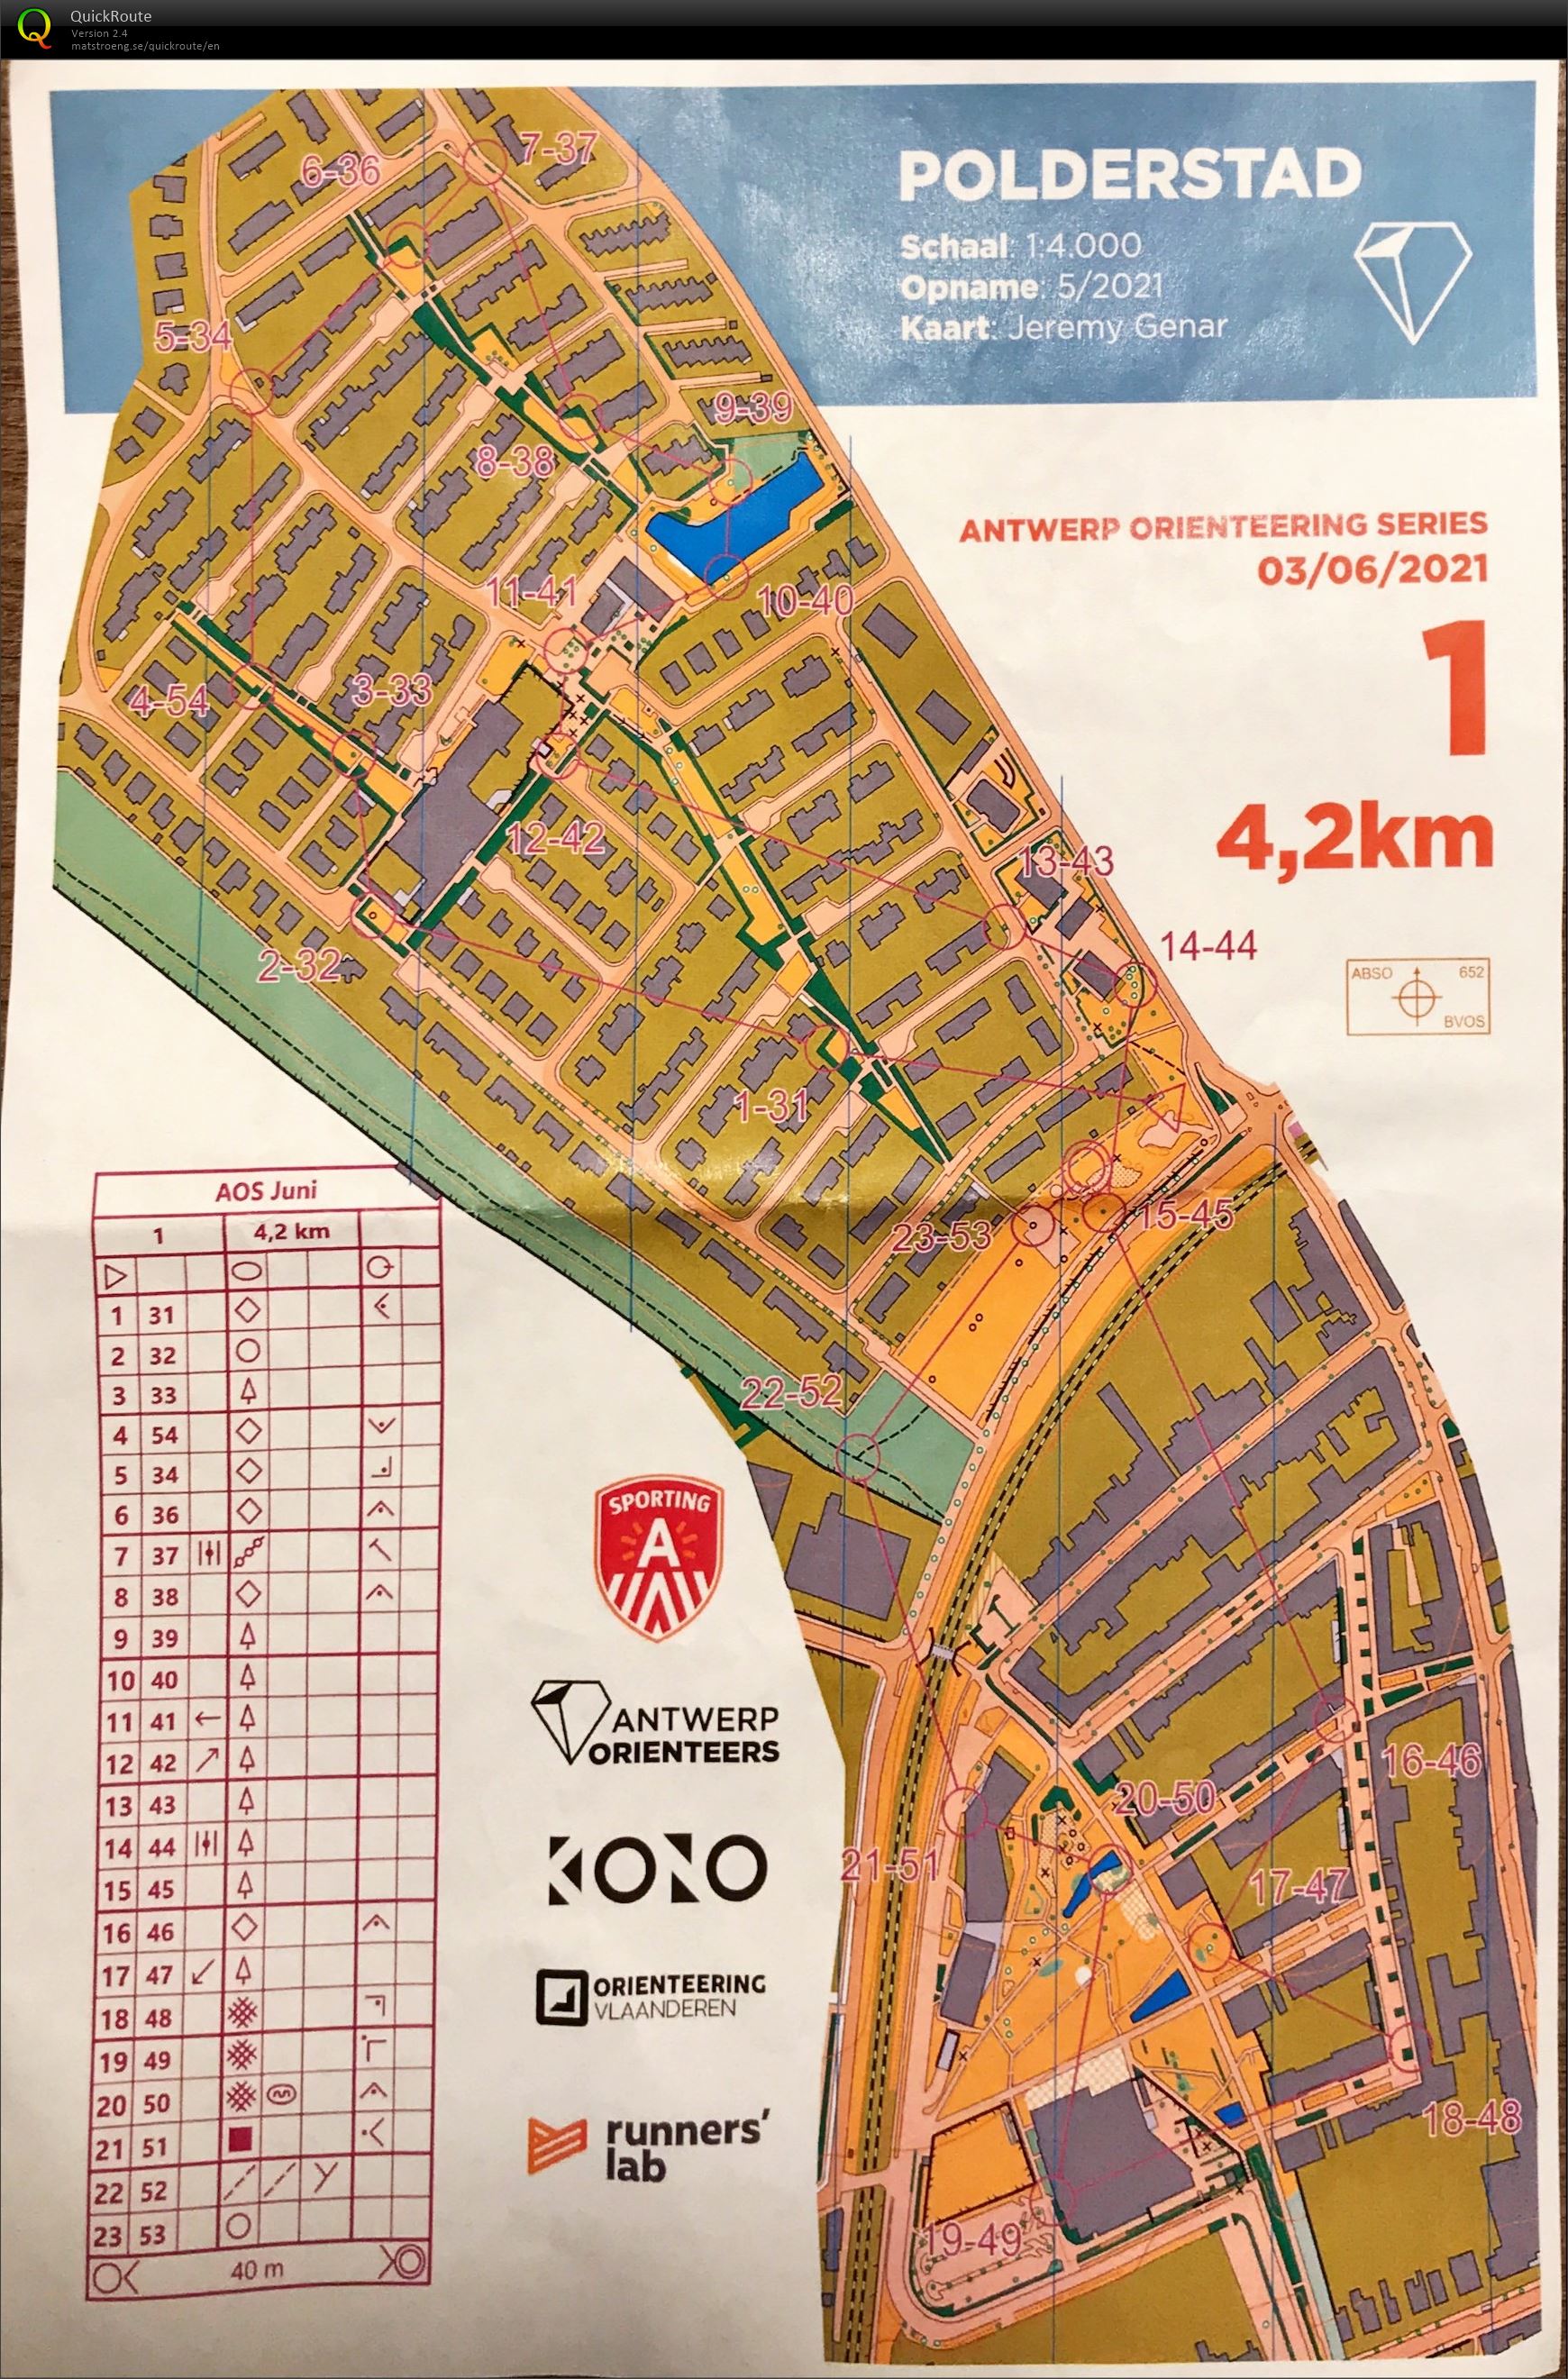 Antwerp Orienteering Series - Polderstad - 4.2K (03/06/2021)